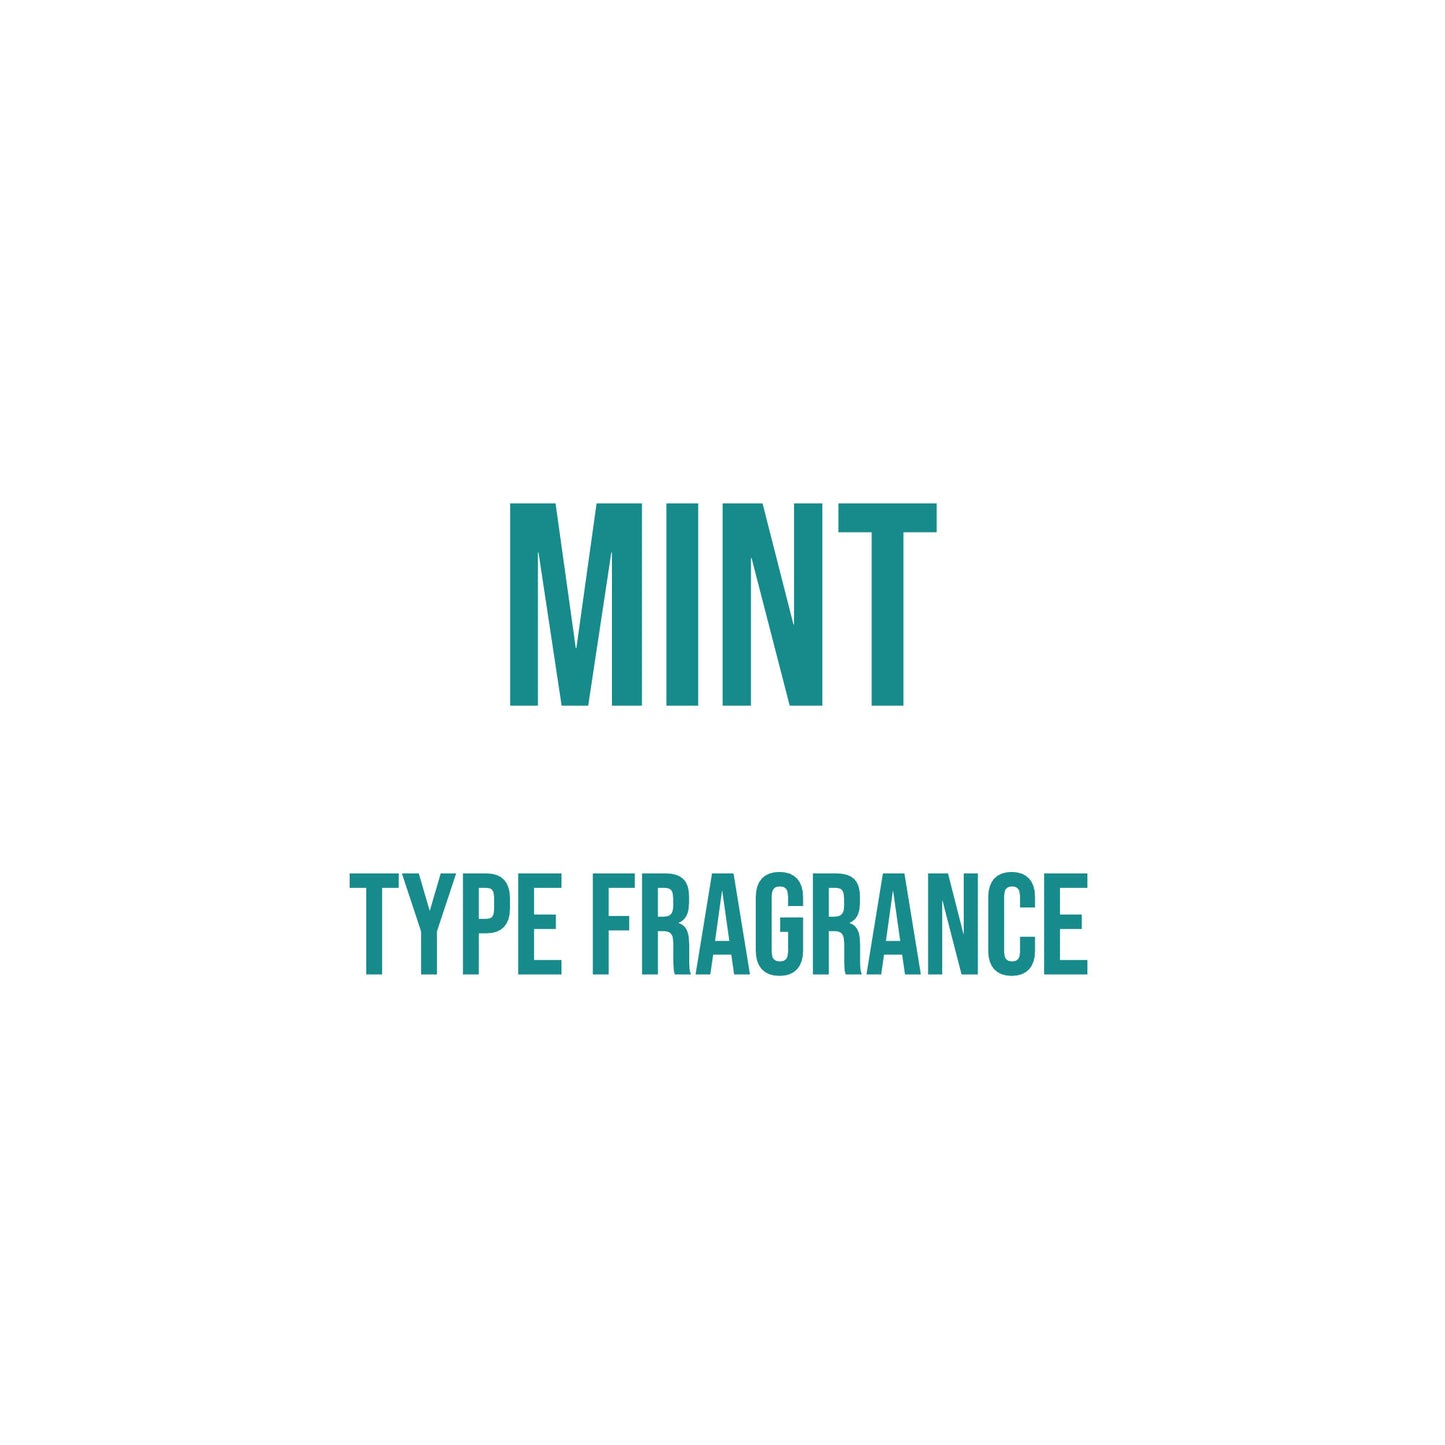 Mint Type Fragrance